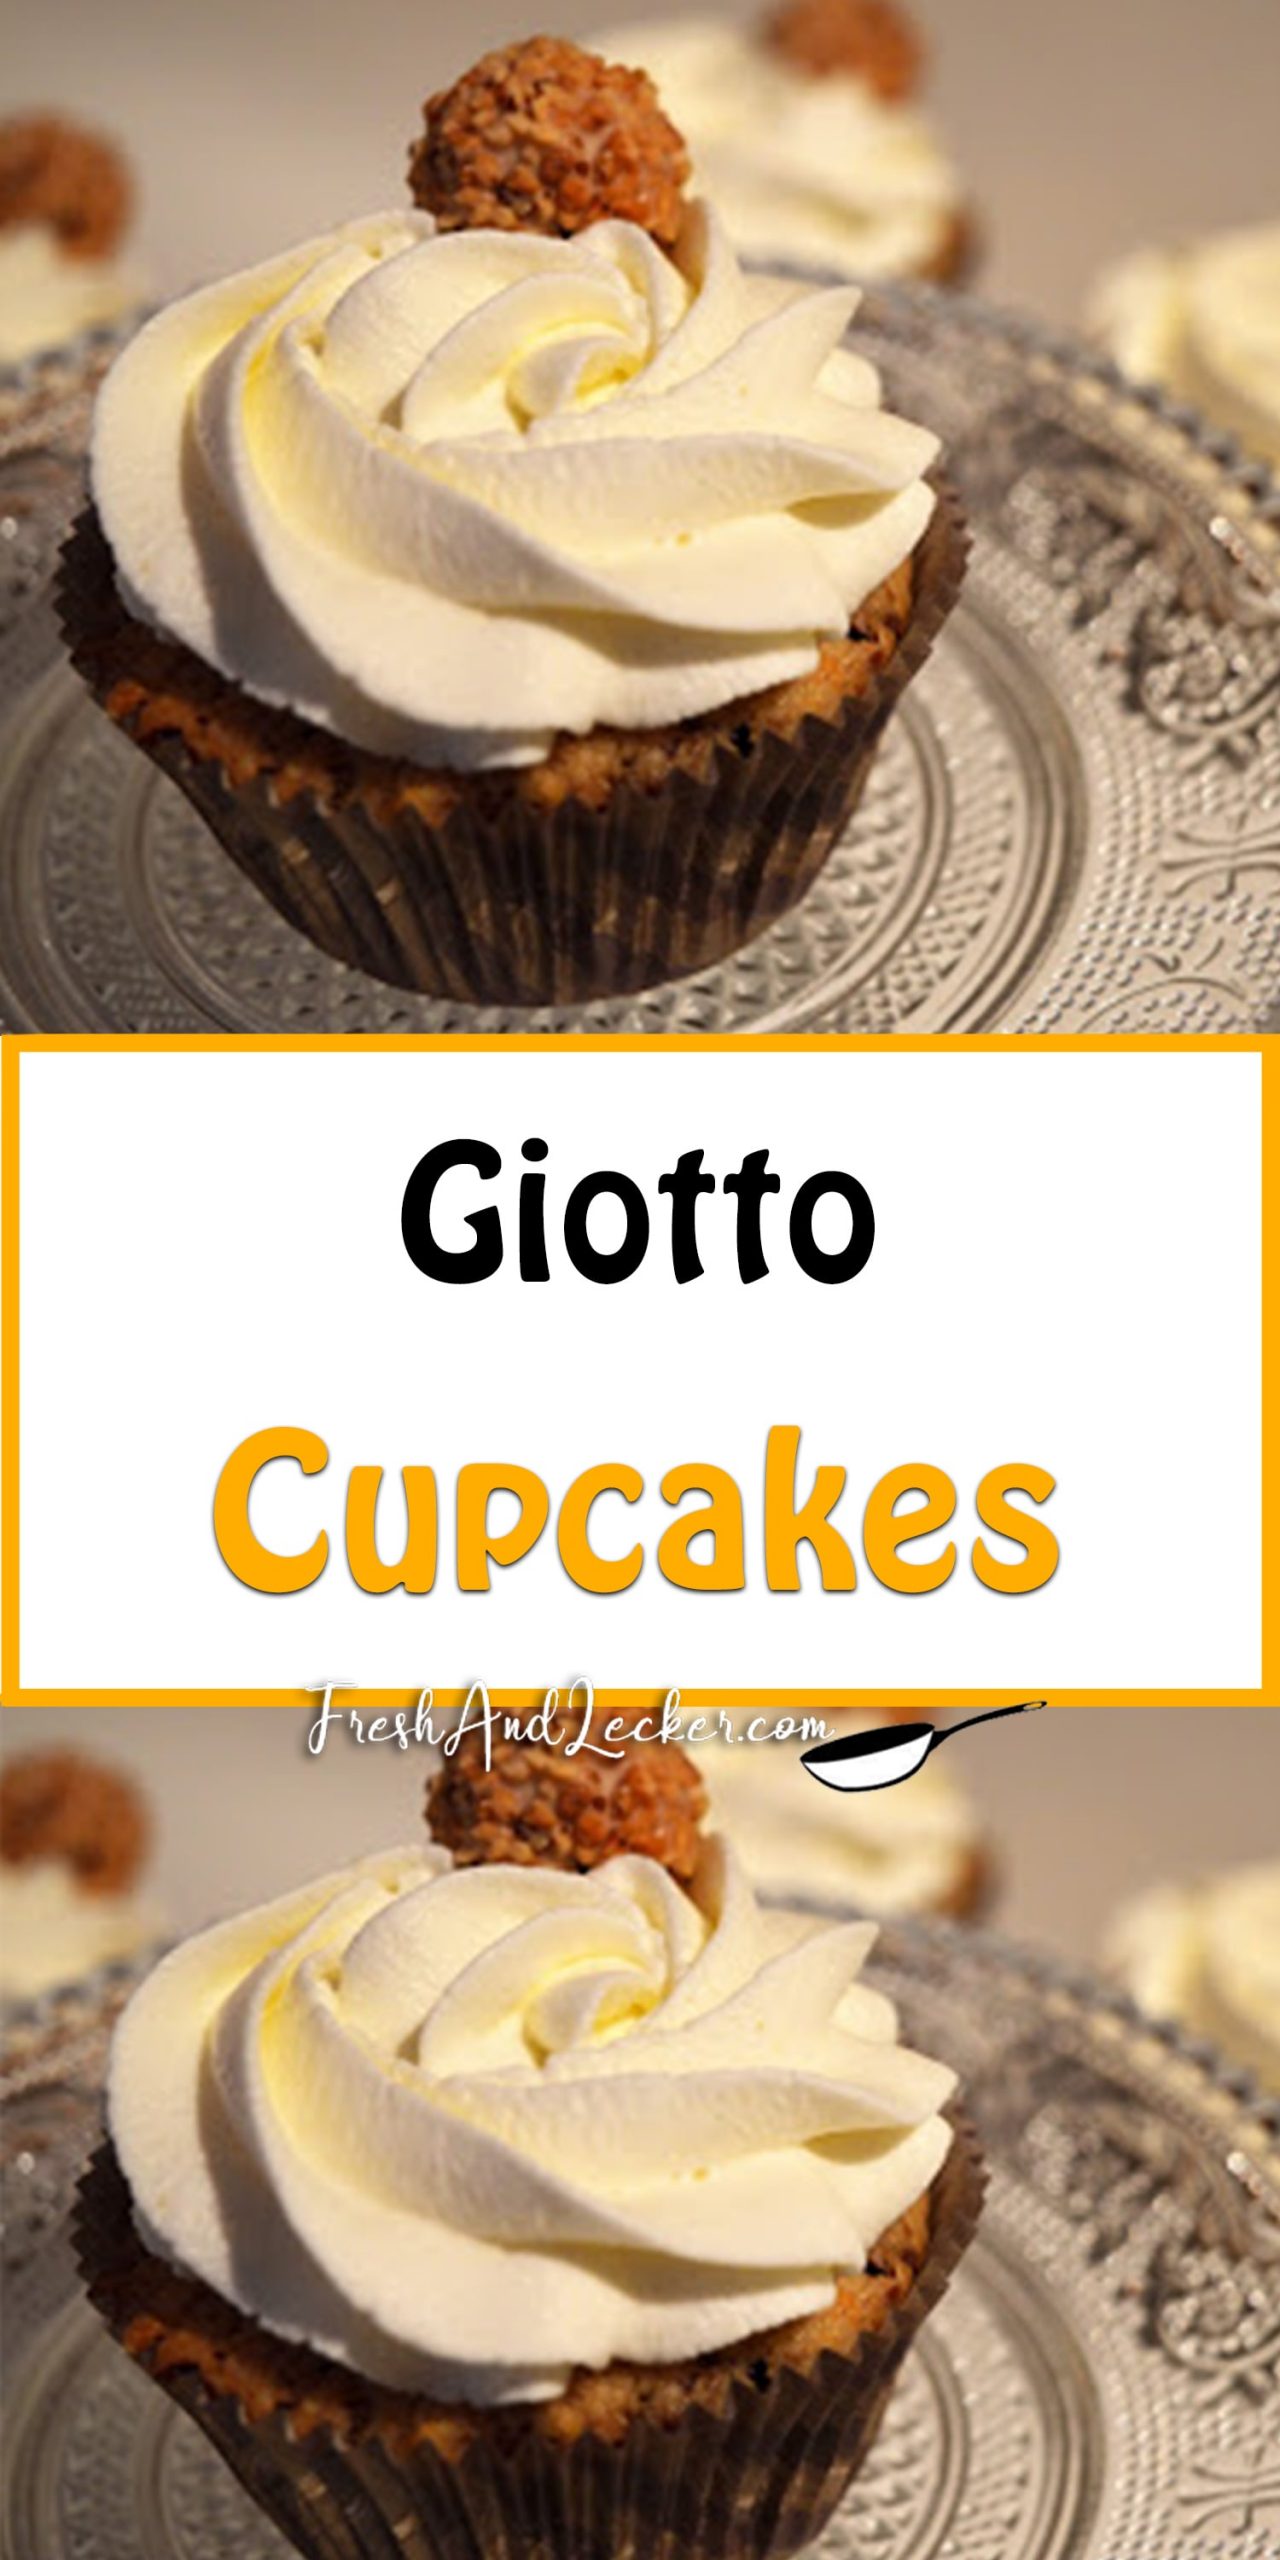 Giotto Cupcakes - Fresh Lecker